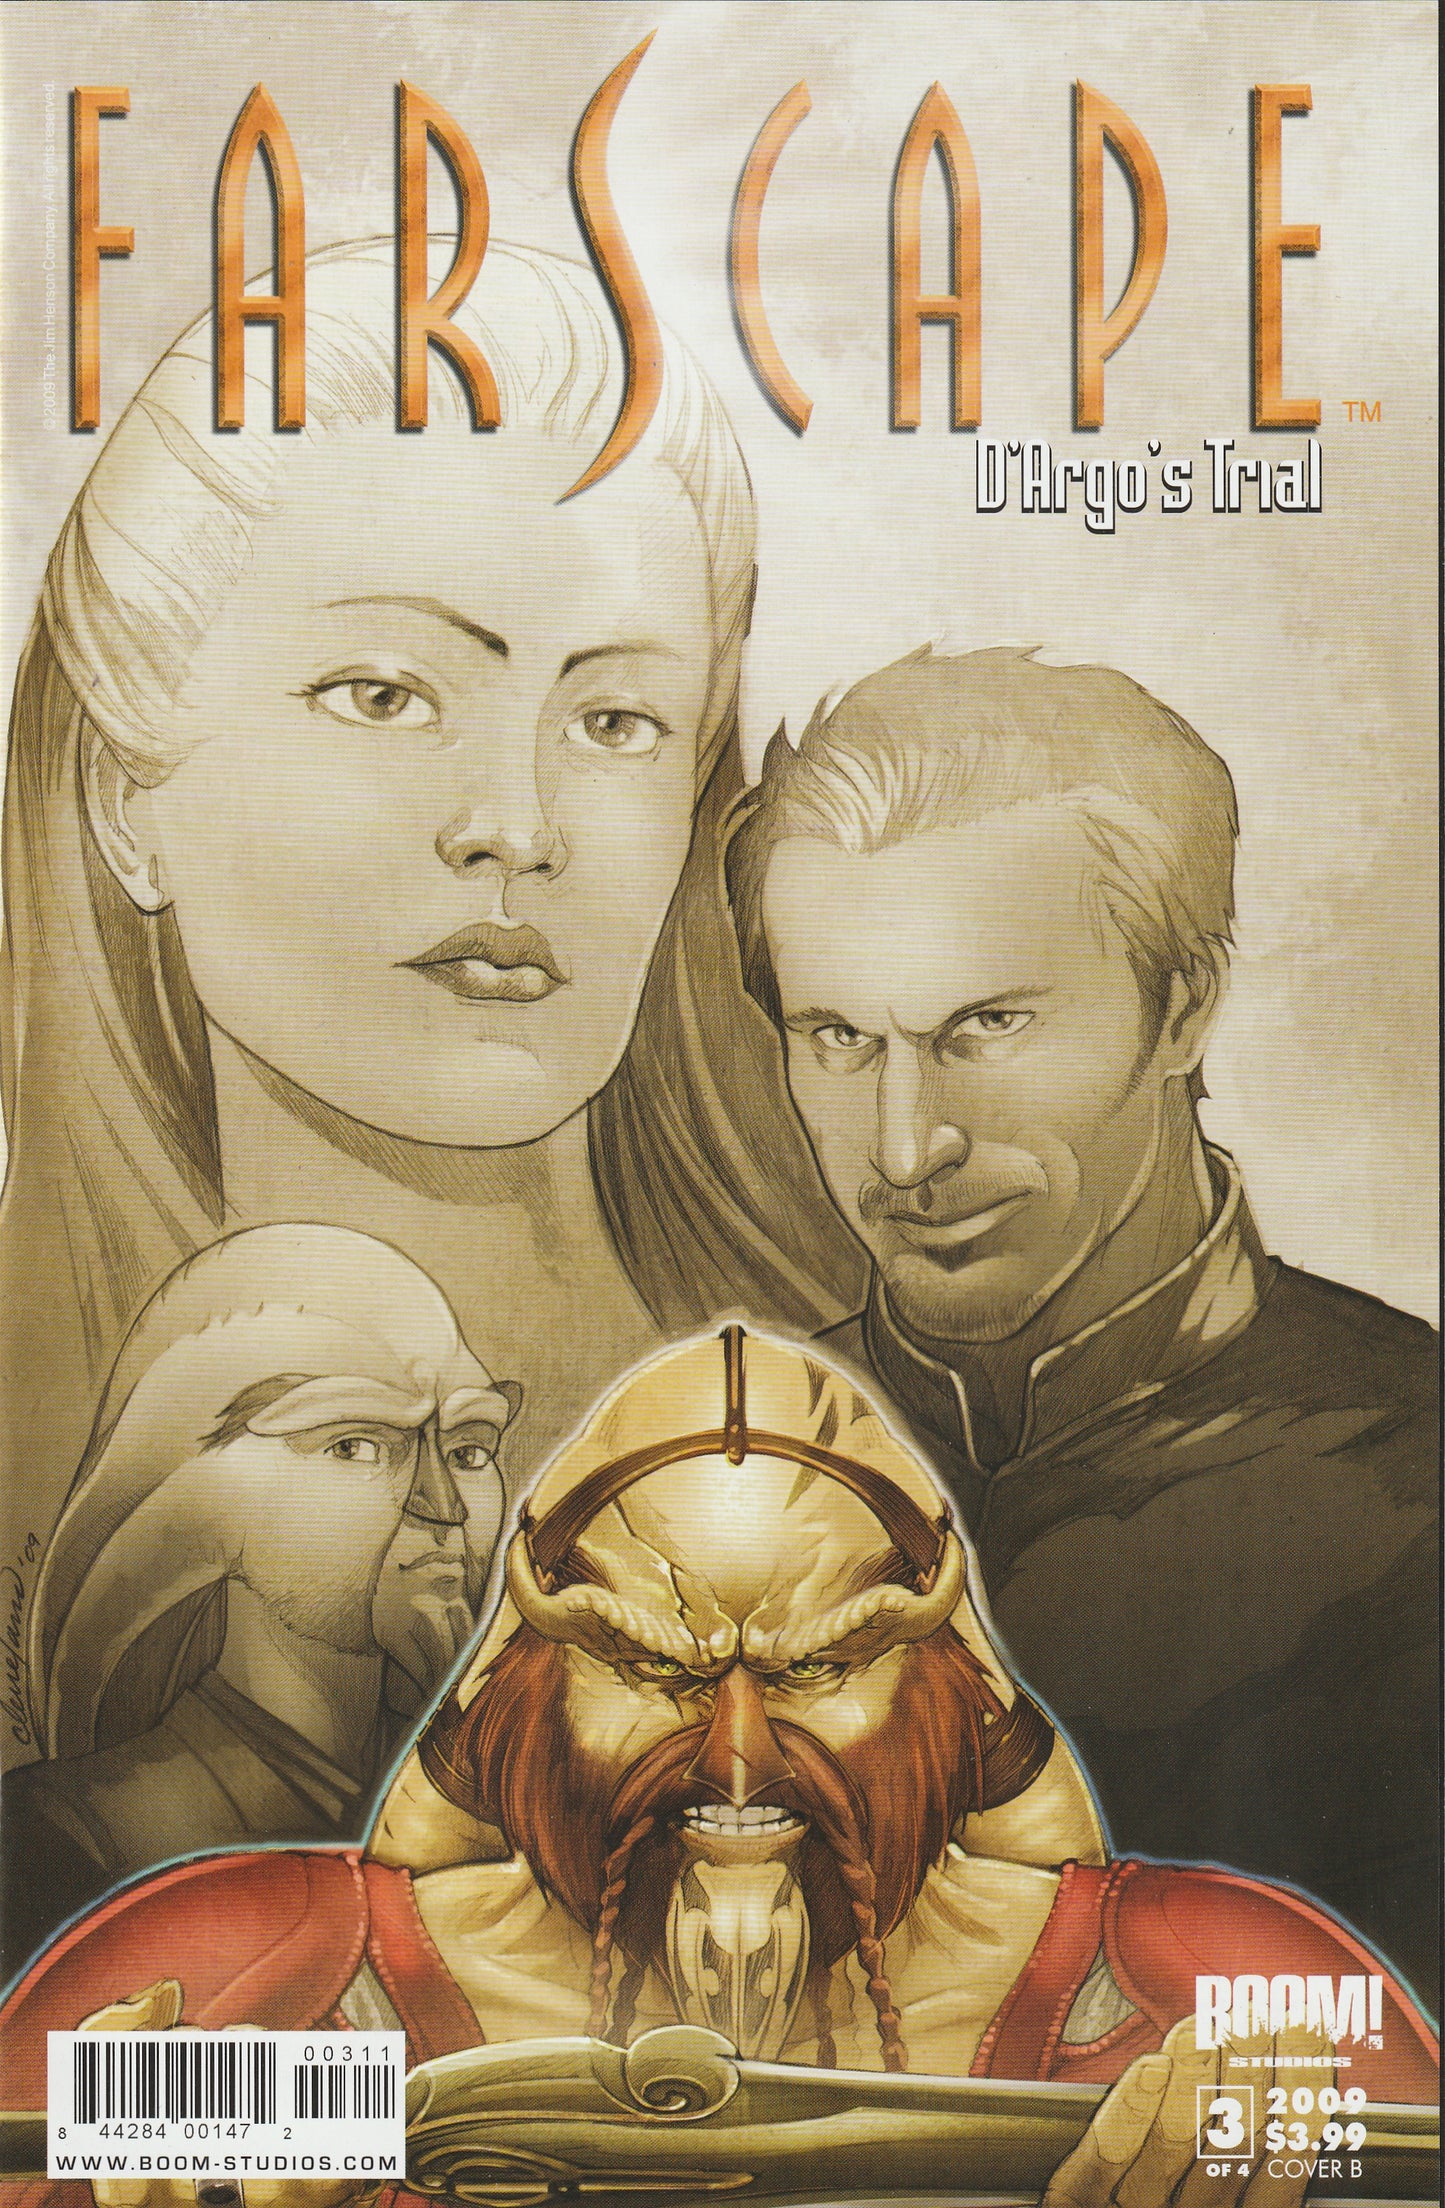 Farscape: D'Argo's Trial (2009) - 4 issue mini series